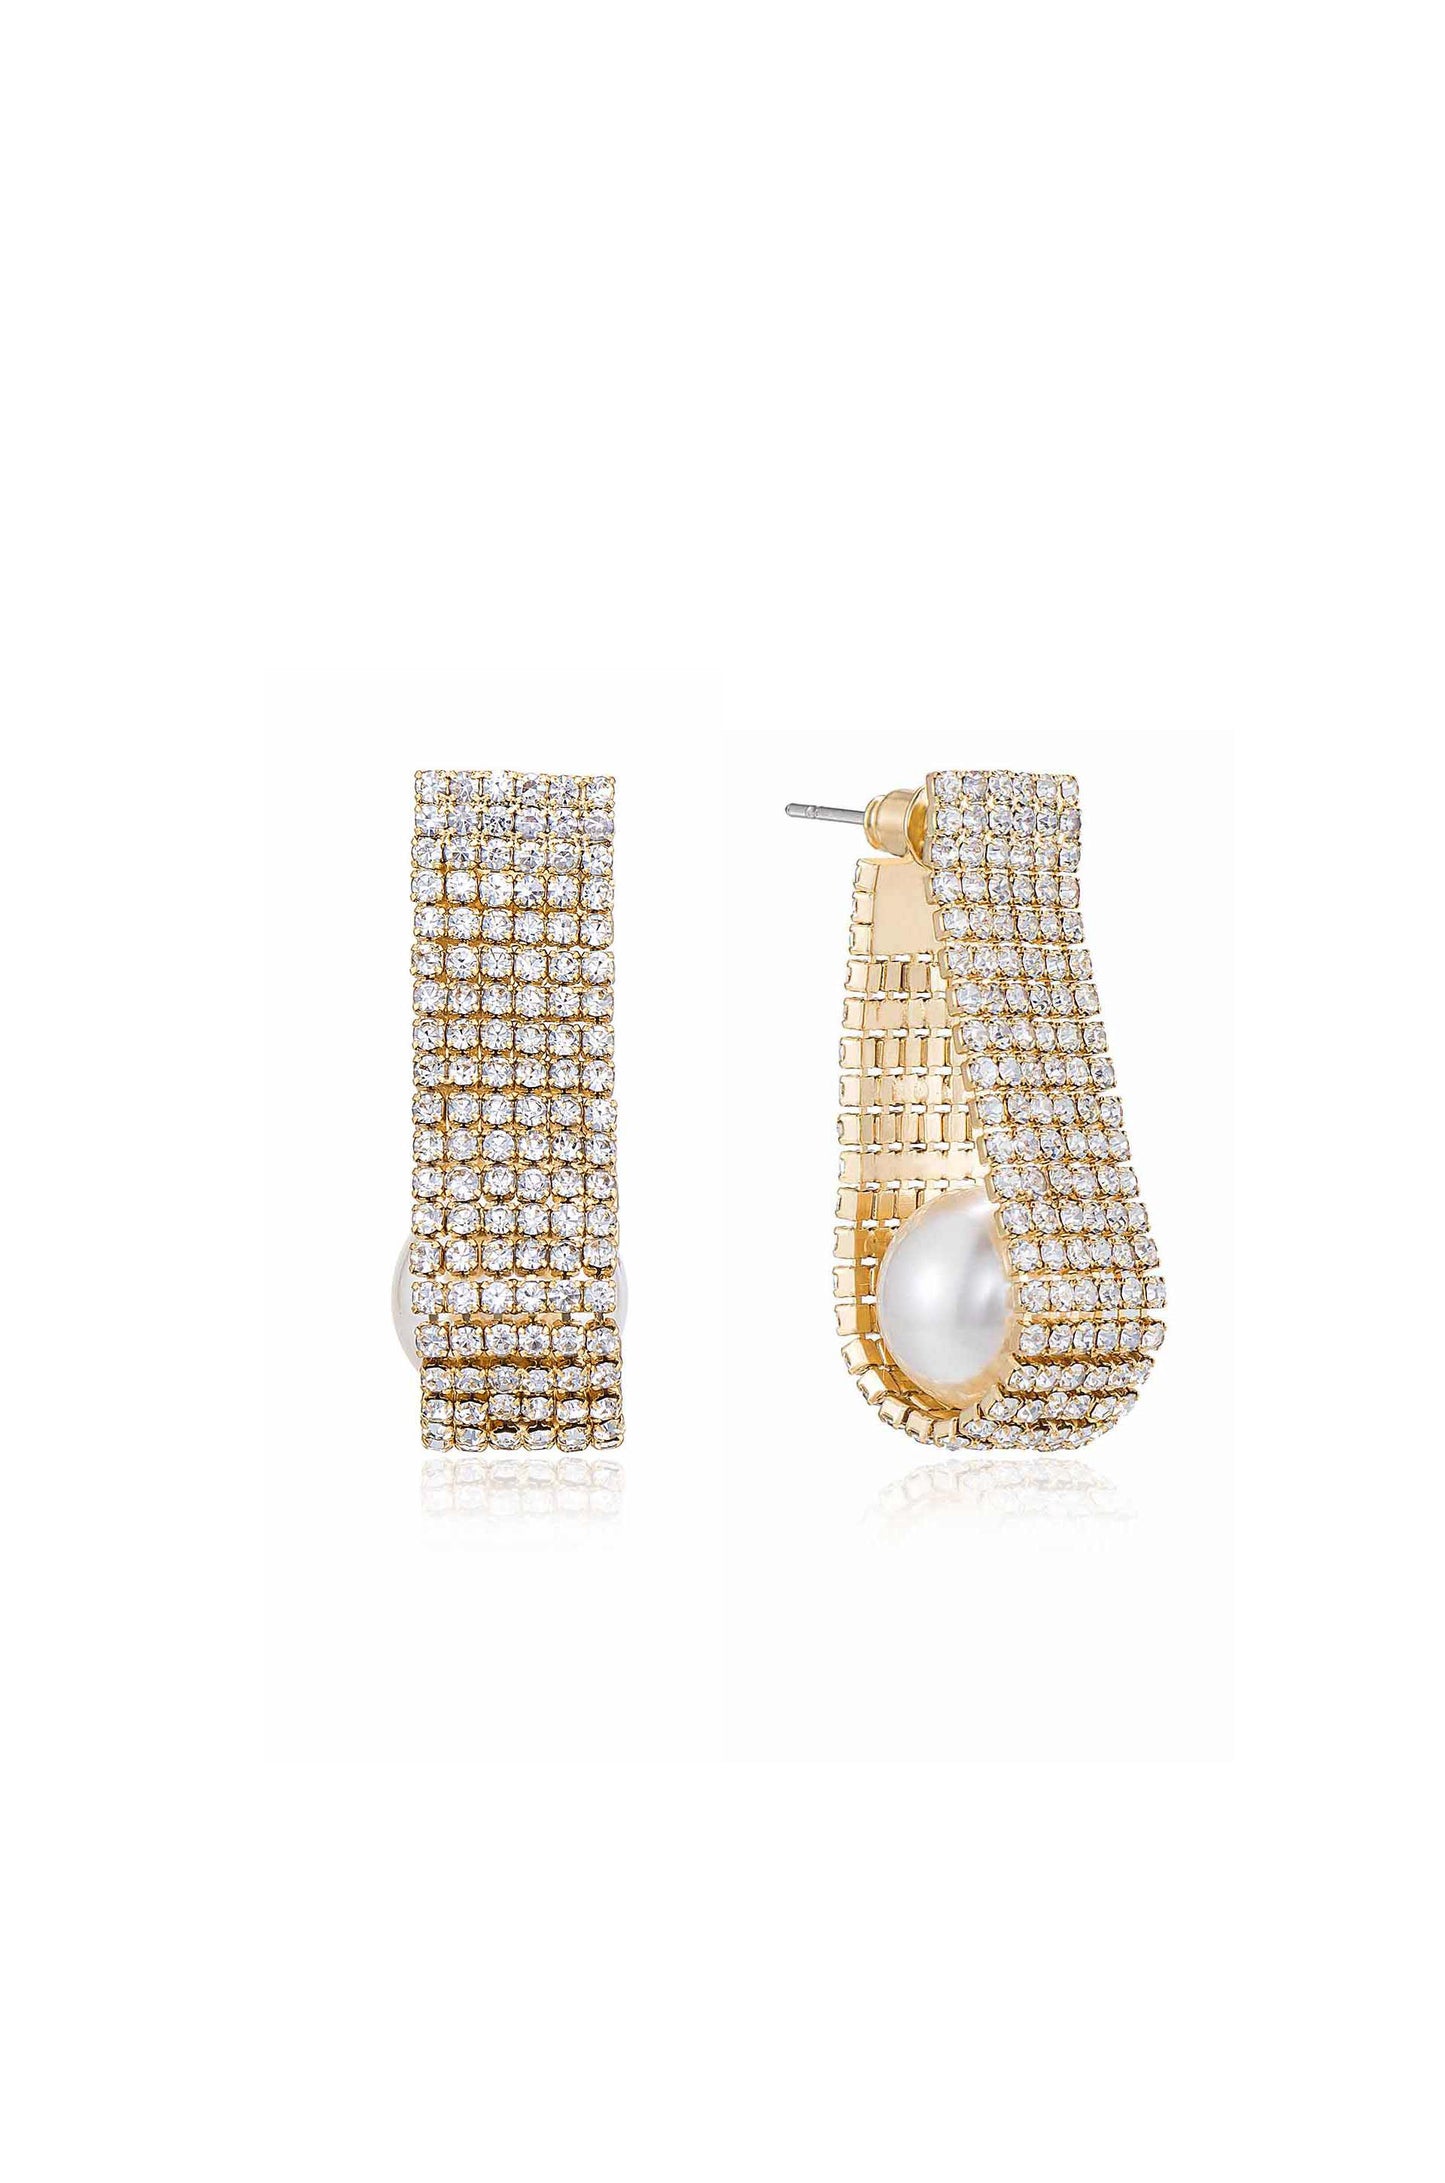 Swaddled Pearl Crystal Teardrop 18k Gold Plated Earrings on white